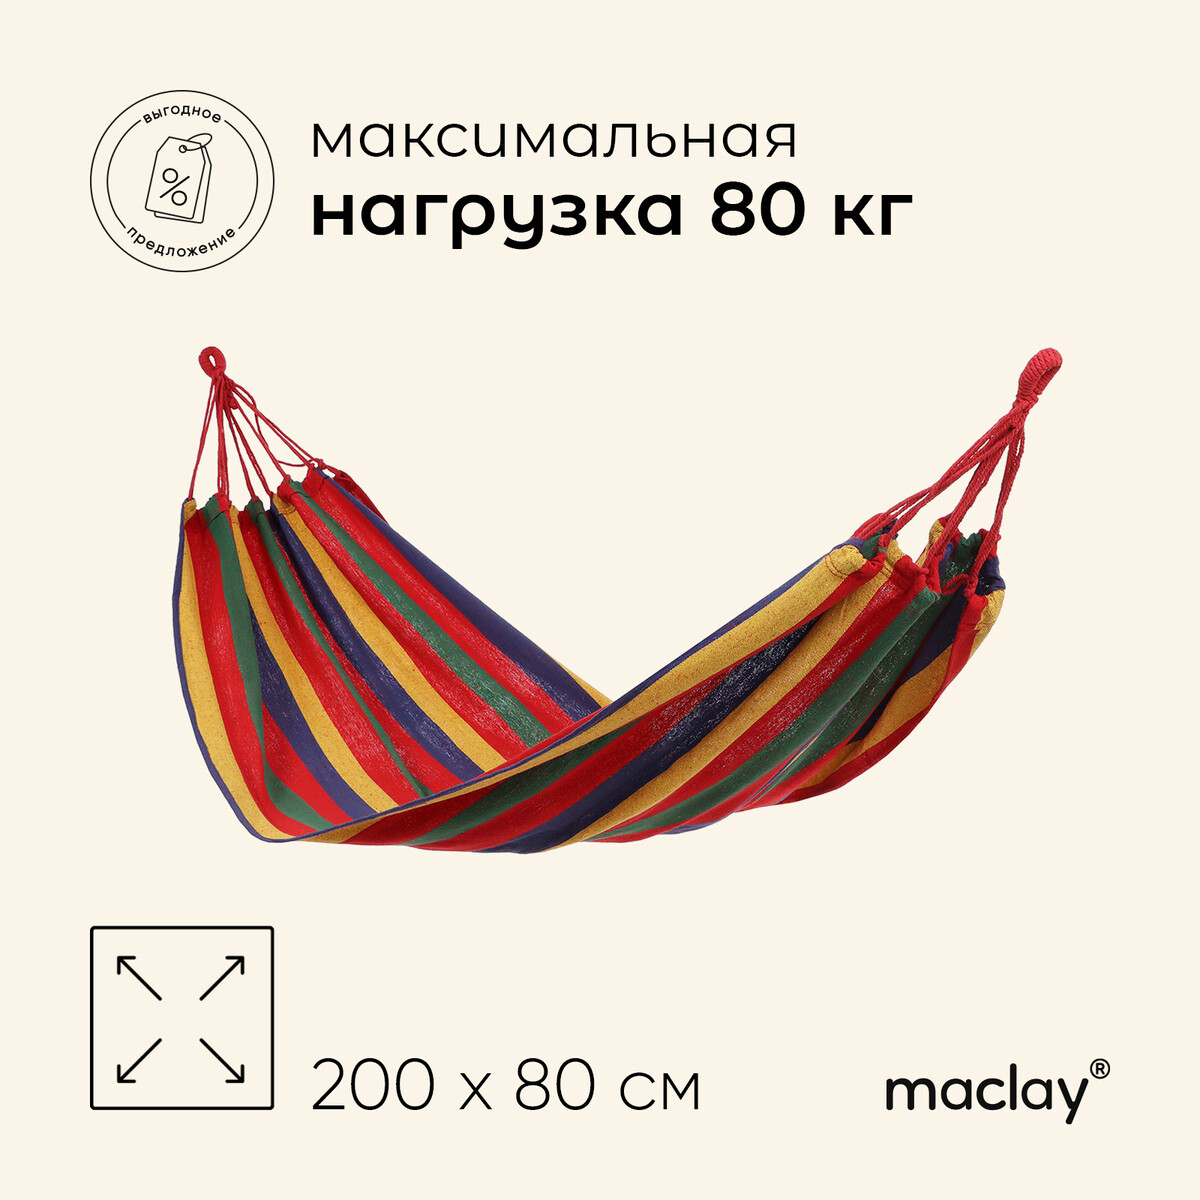 Гамак 200 х 80 см, многоцветный Maclay 02643762 - фото 1